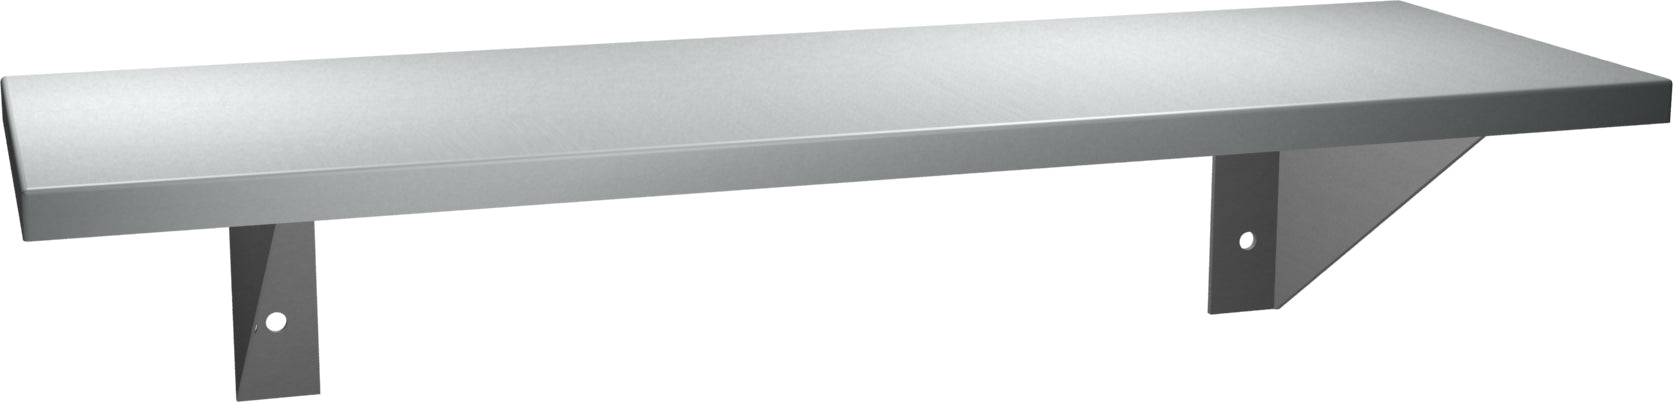 ASI 0692-824 Shelf, Stainless Steel, 8 X 24 Inch